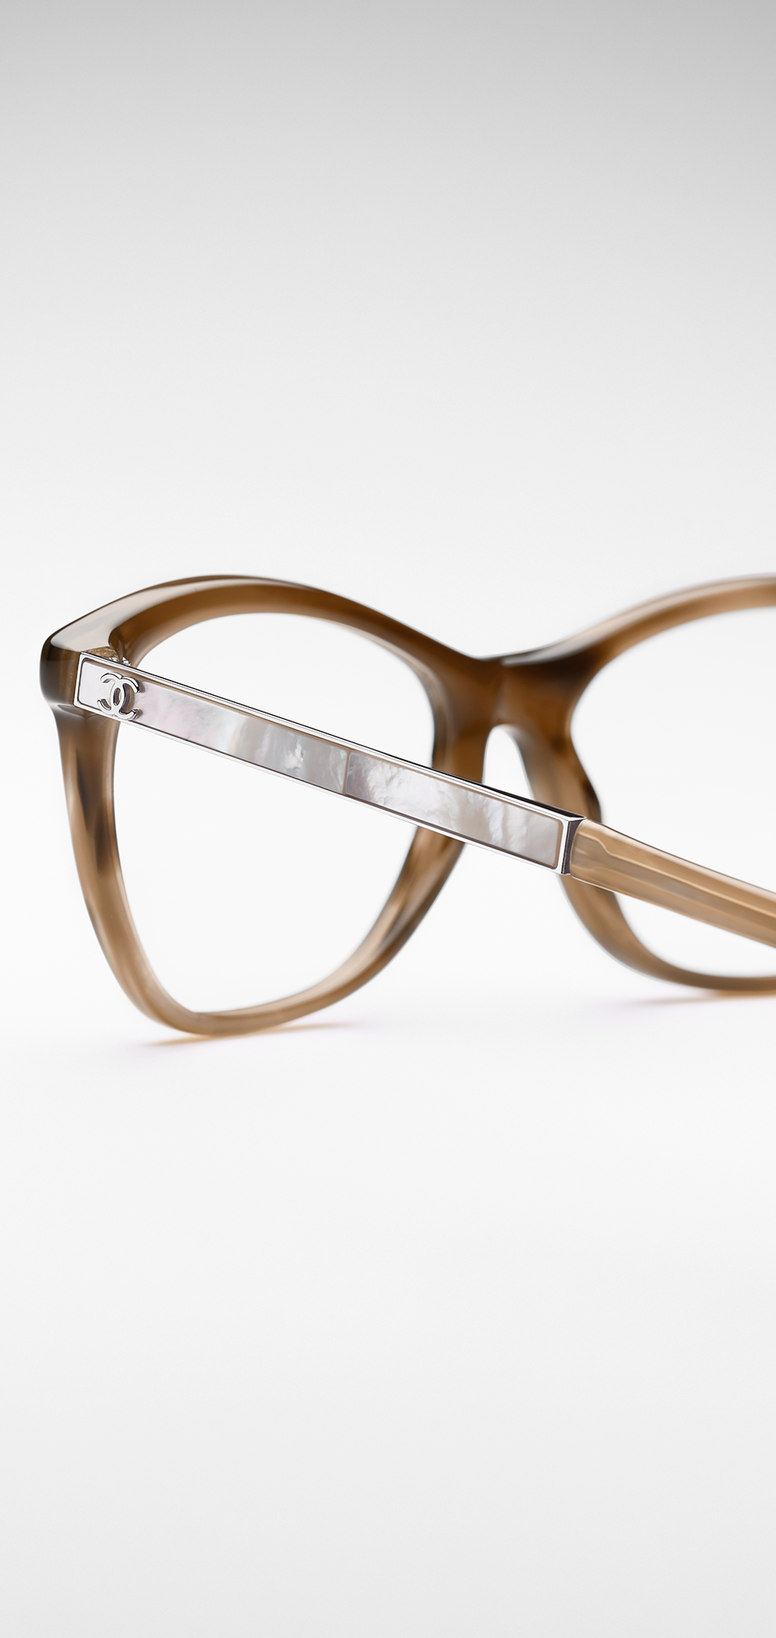 Chanel Eyewear - Beauty, Art and Function - Martin Reynolds Opticians